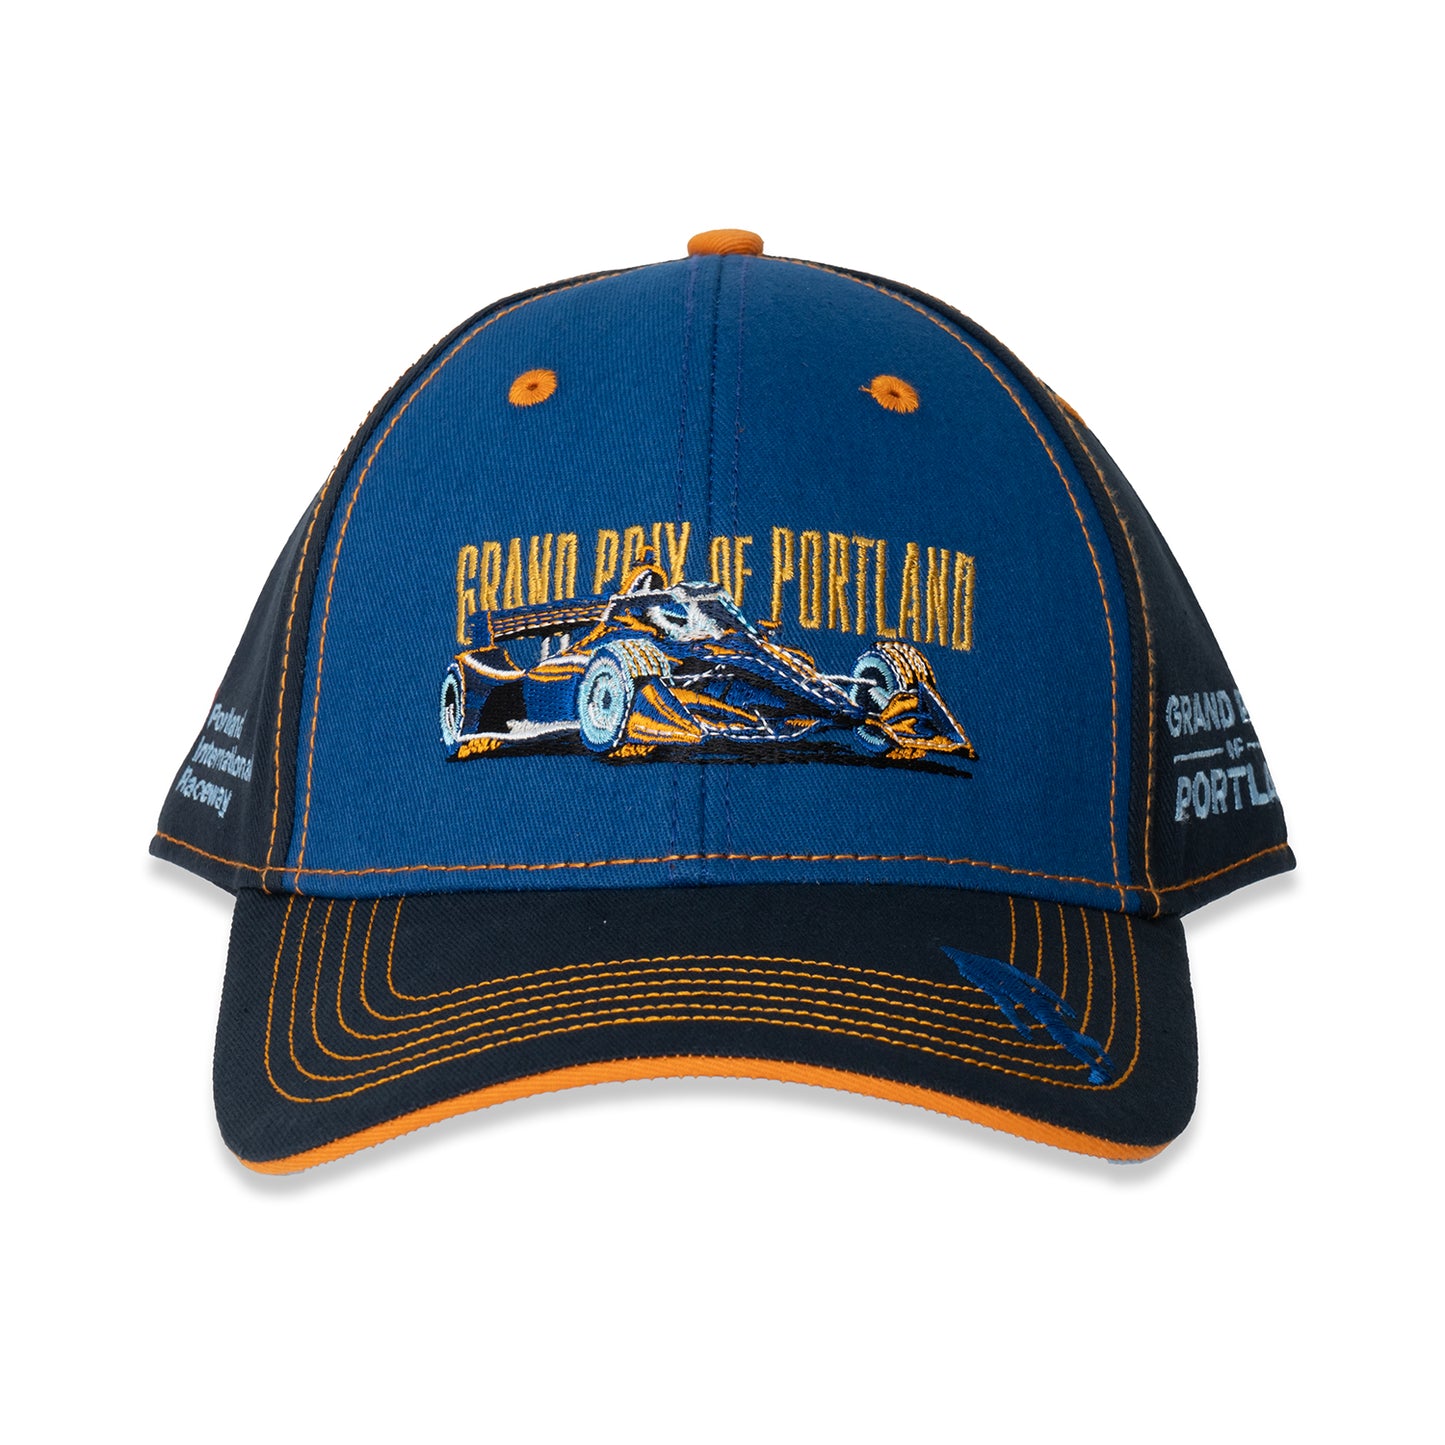 2023 Grand Prix of Portland Car Hat - Royal / Navy